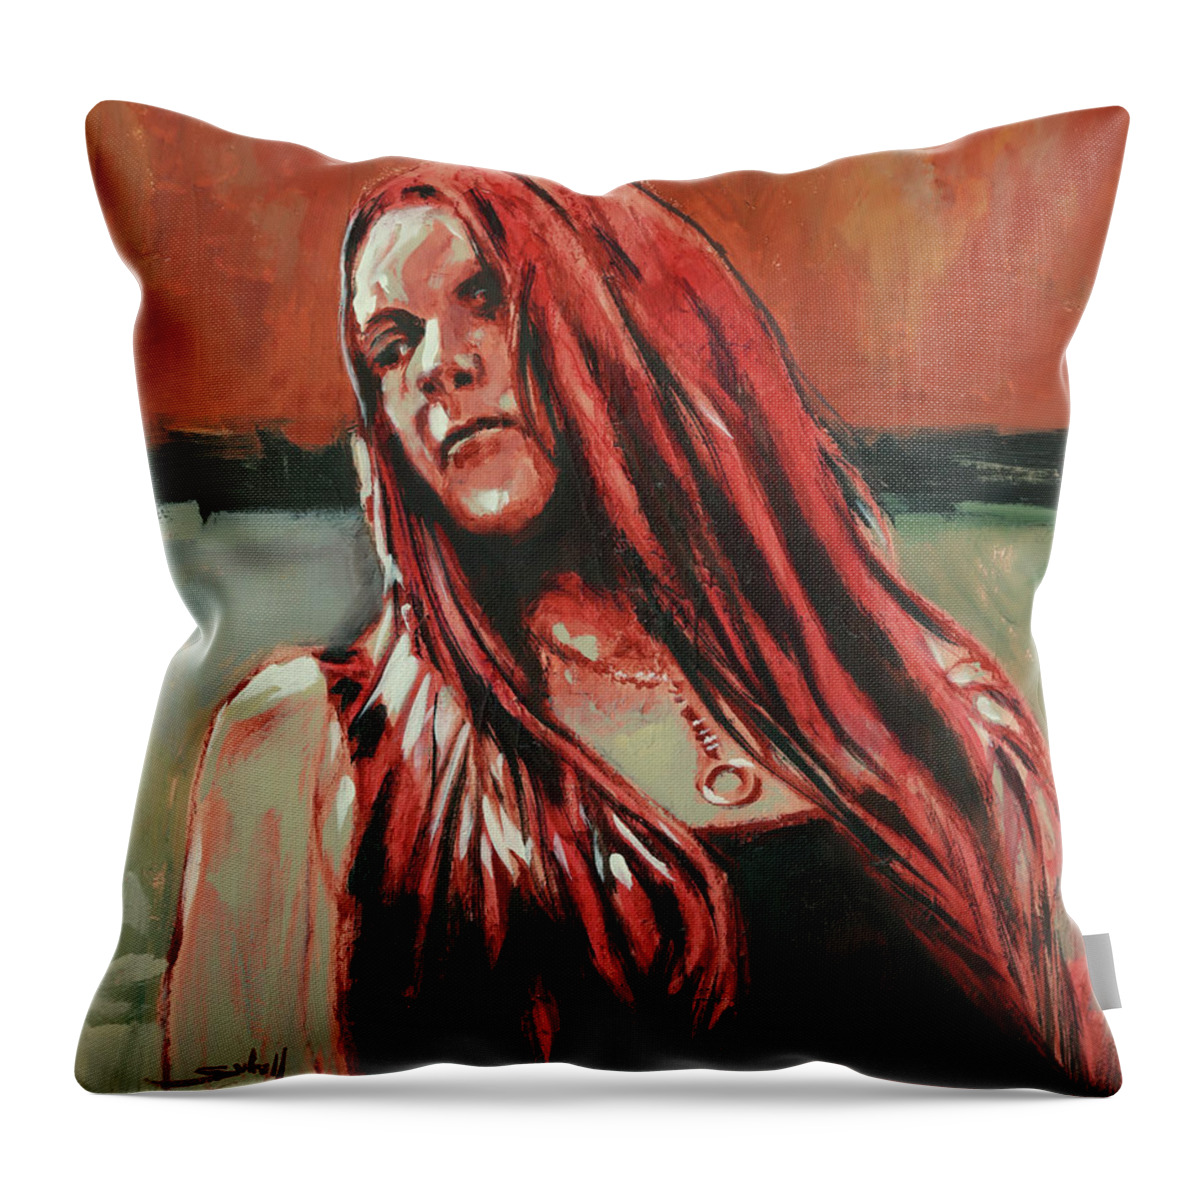 Myna Aranea Throw Pillow featuring the painting Myna Aranea by Sv Bell